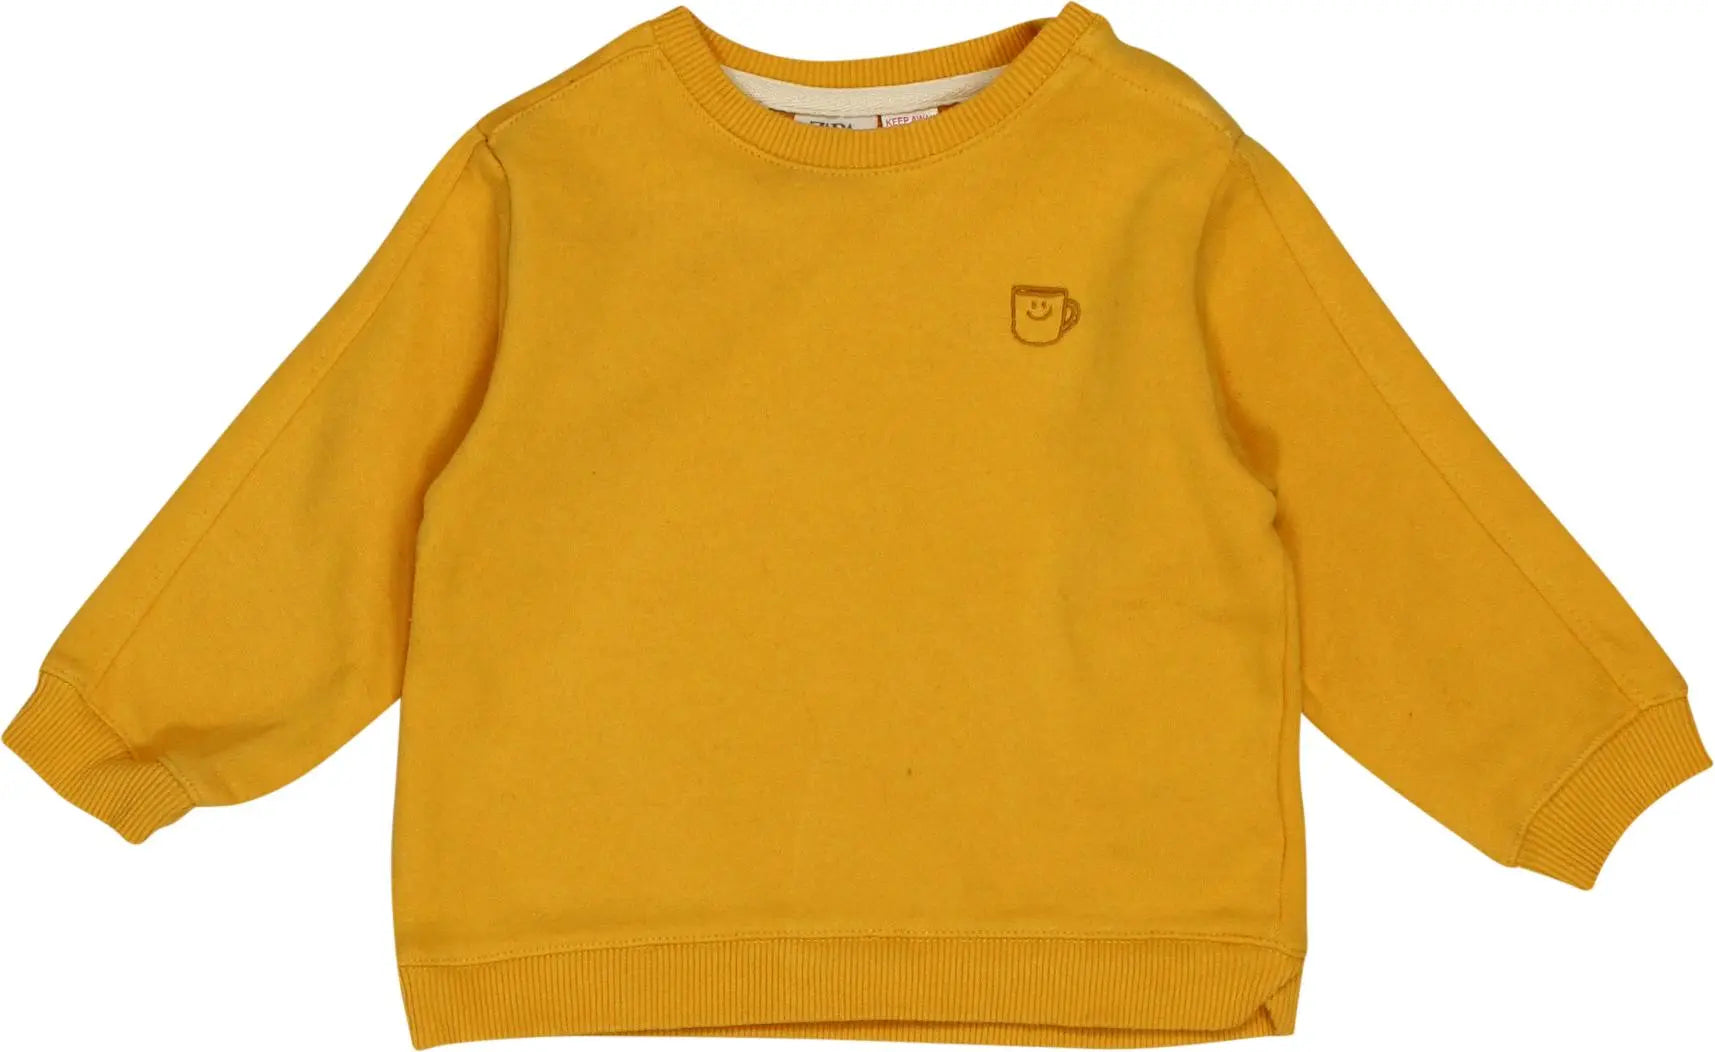 Zara - Sweatshirt- ThriftTale.com - Vintage and second handclothing